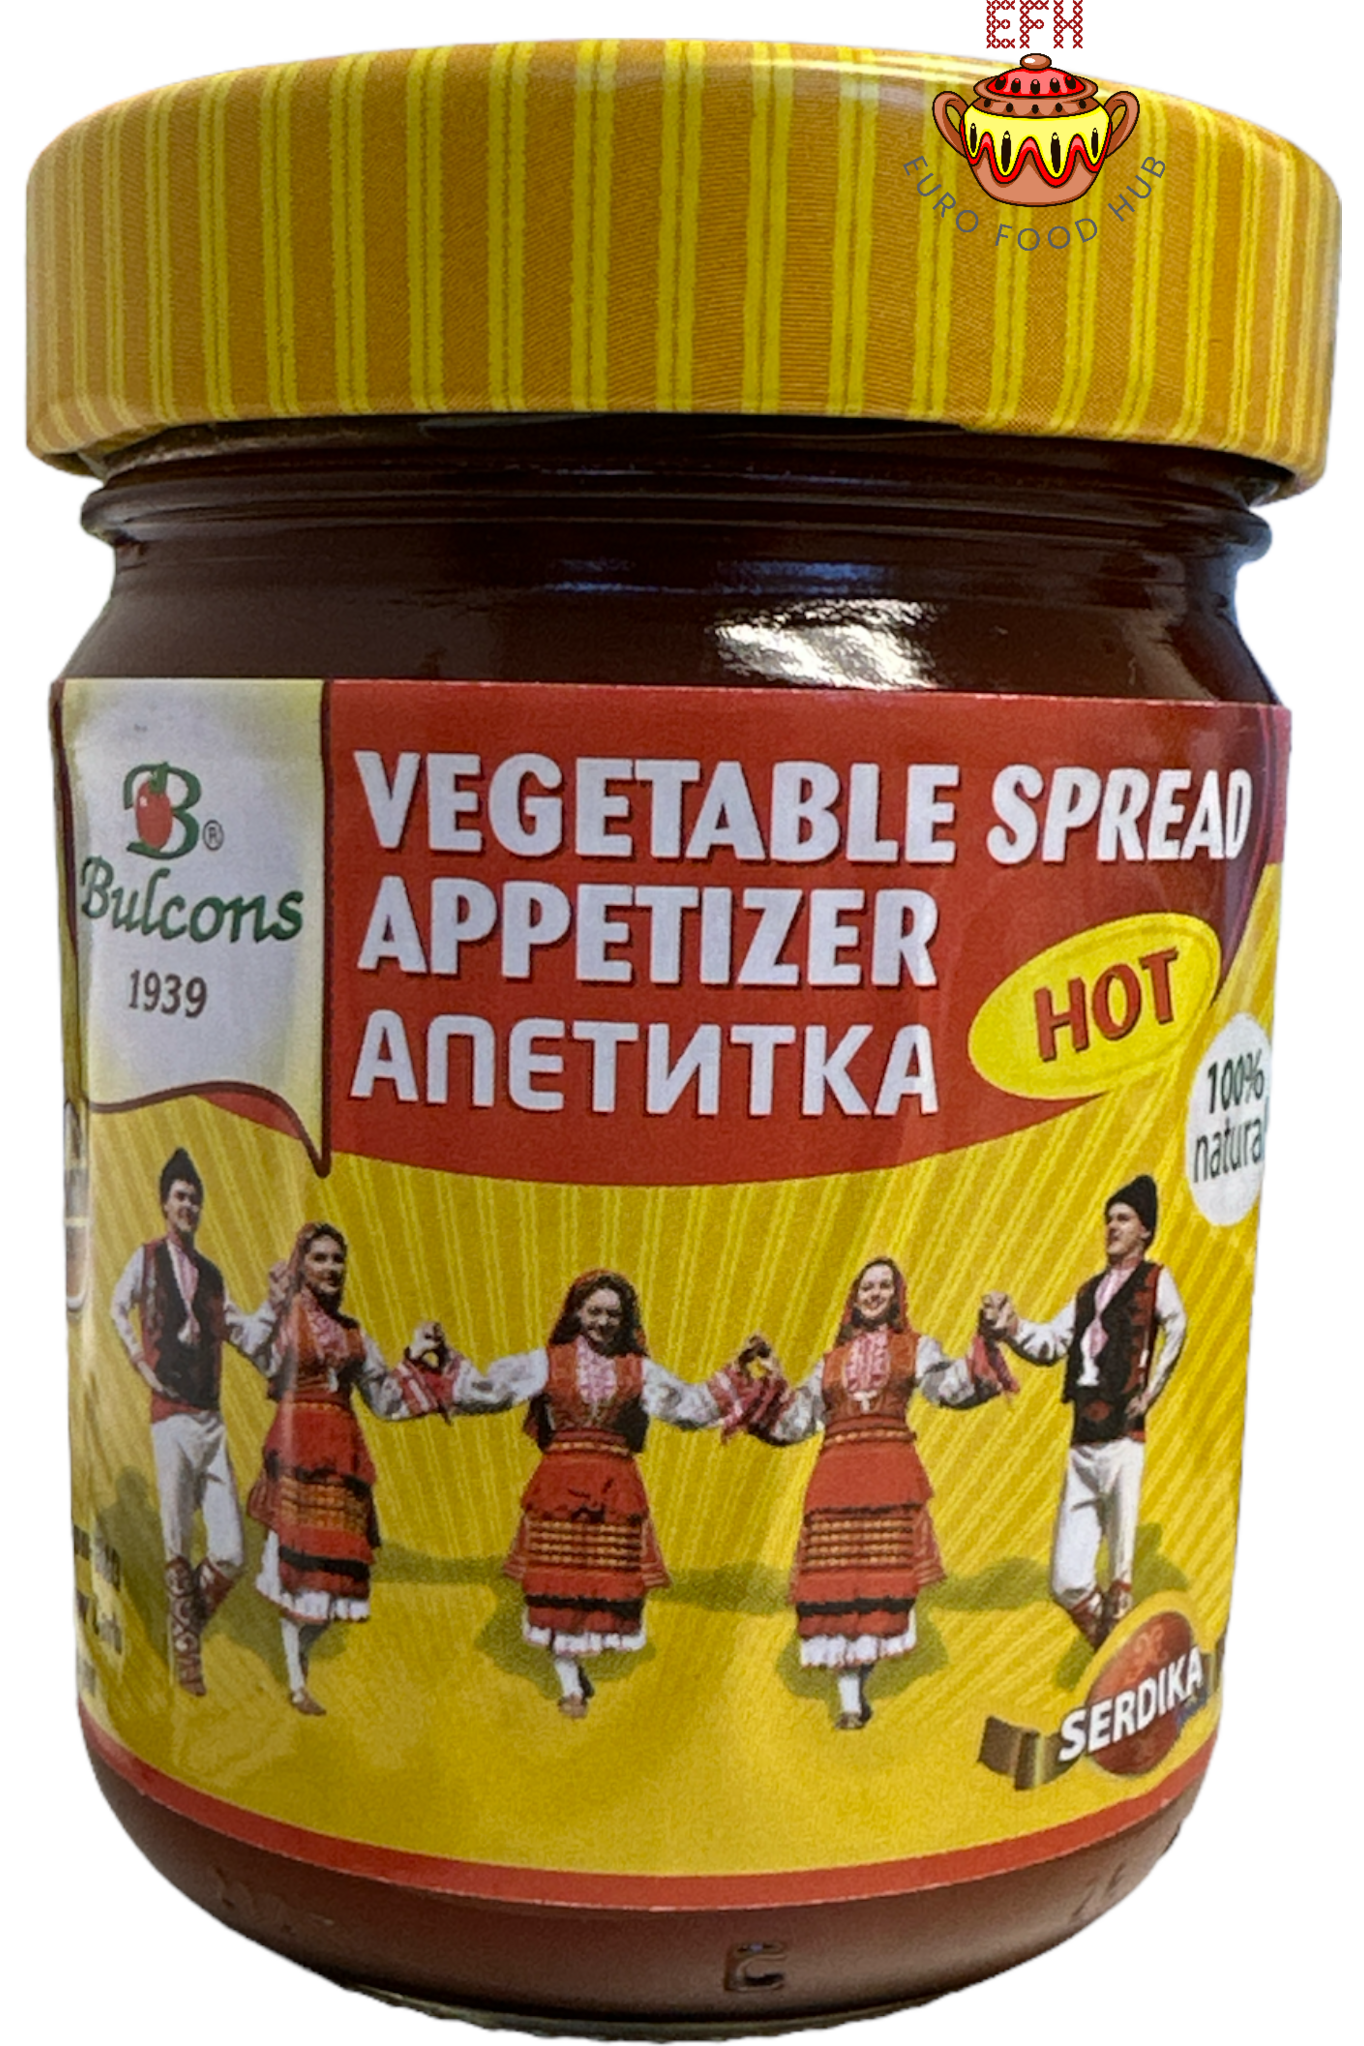 Bulgarian Picante Sauce - APETITKA - 210g